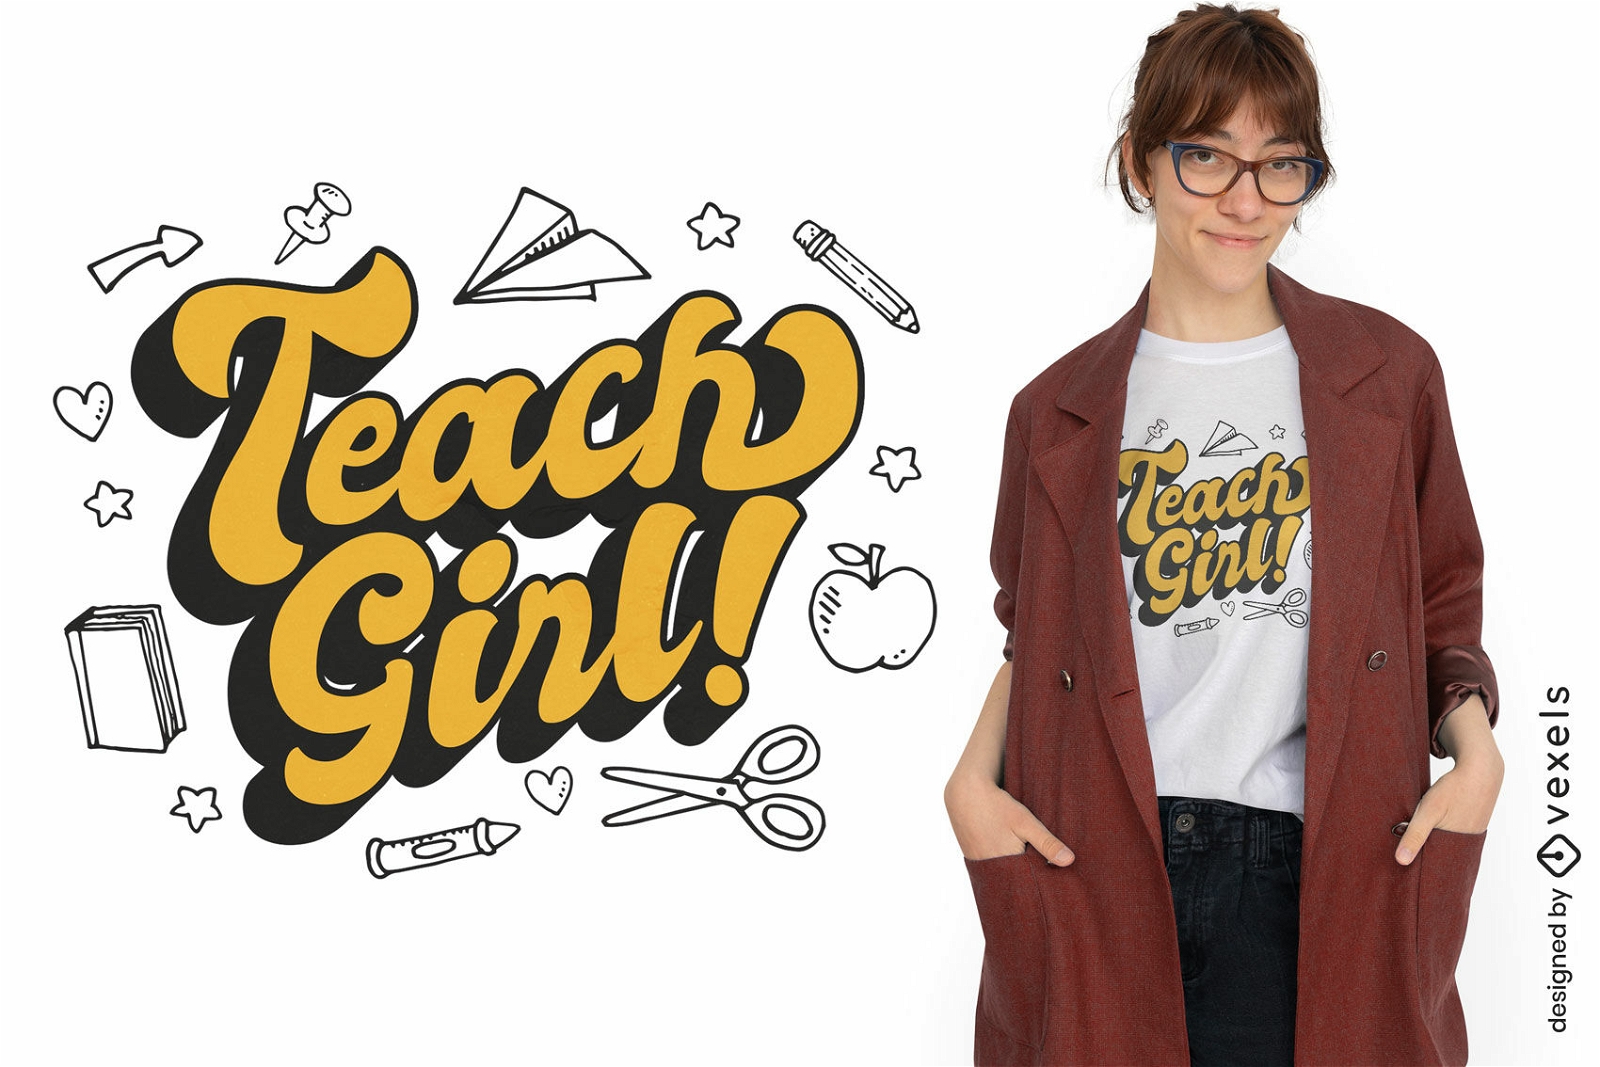 Teacher girl t-shirt design